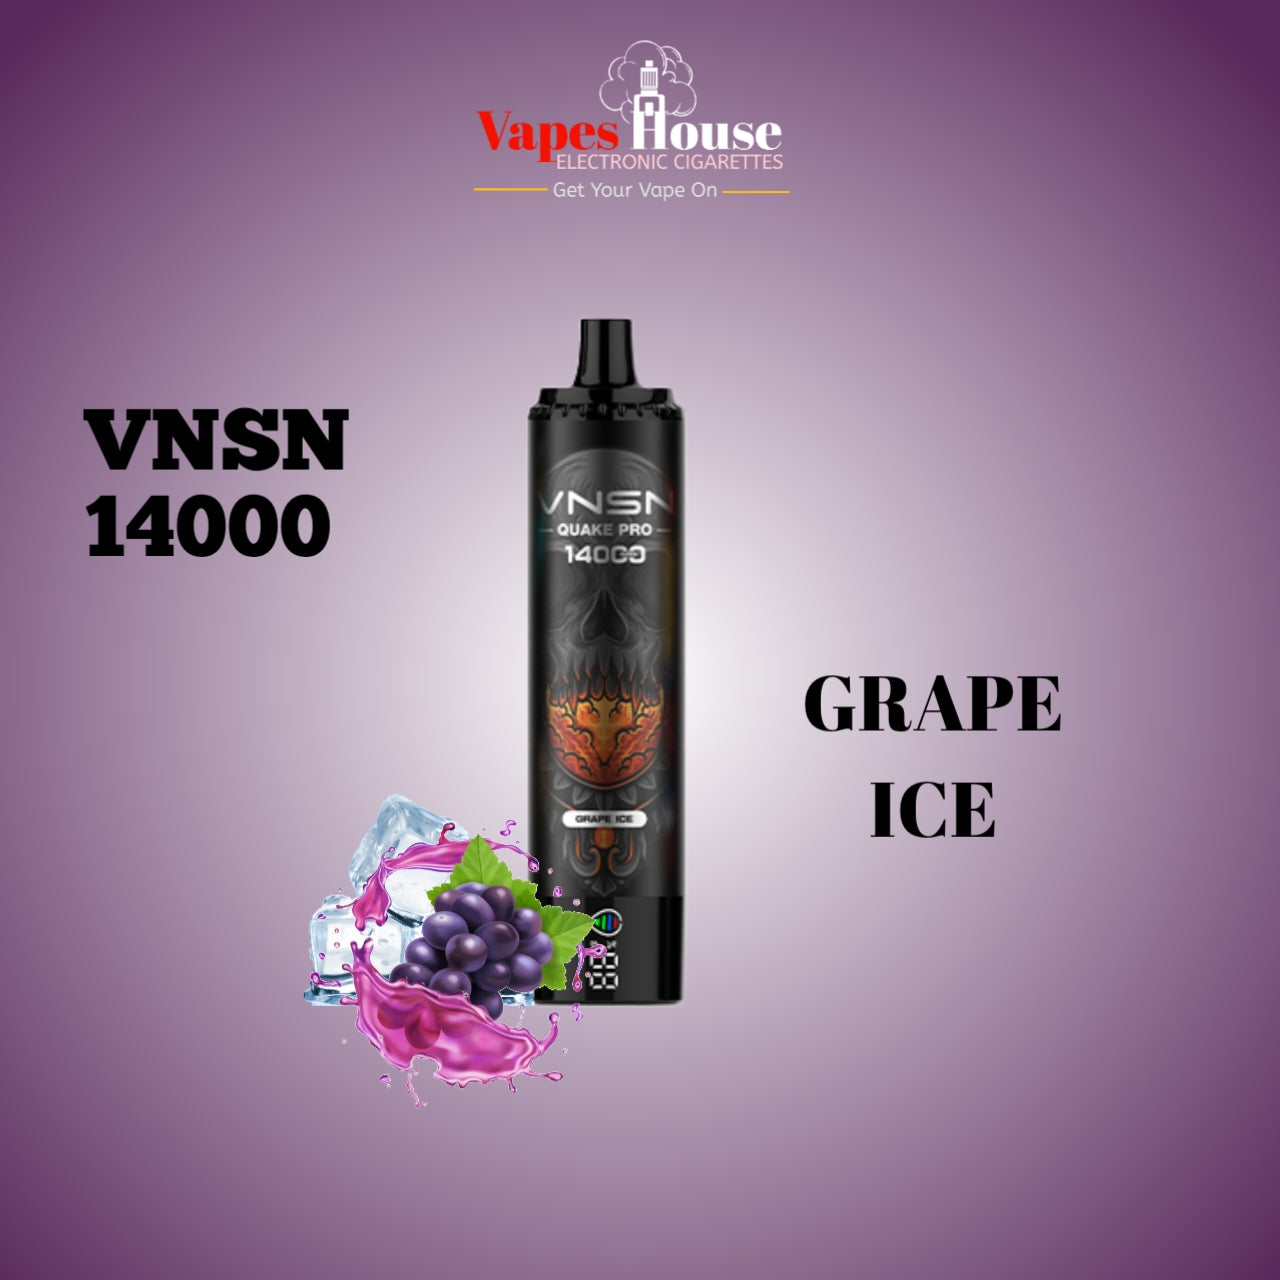 VNSN Quake Pro 14000 Grape Ice Disposable vape